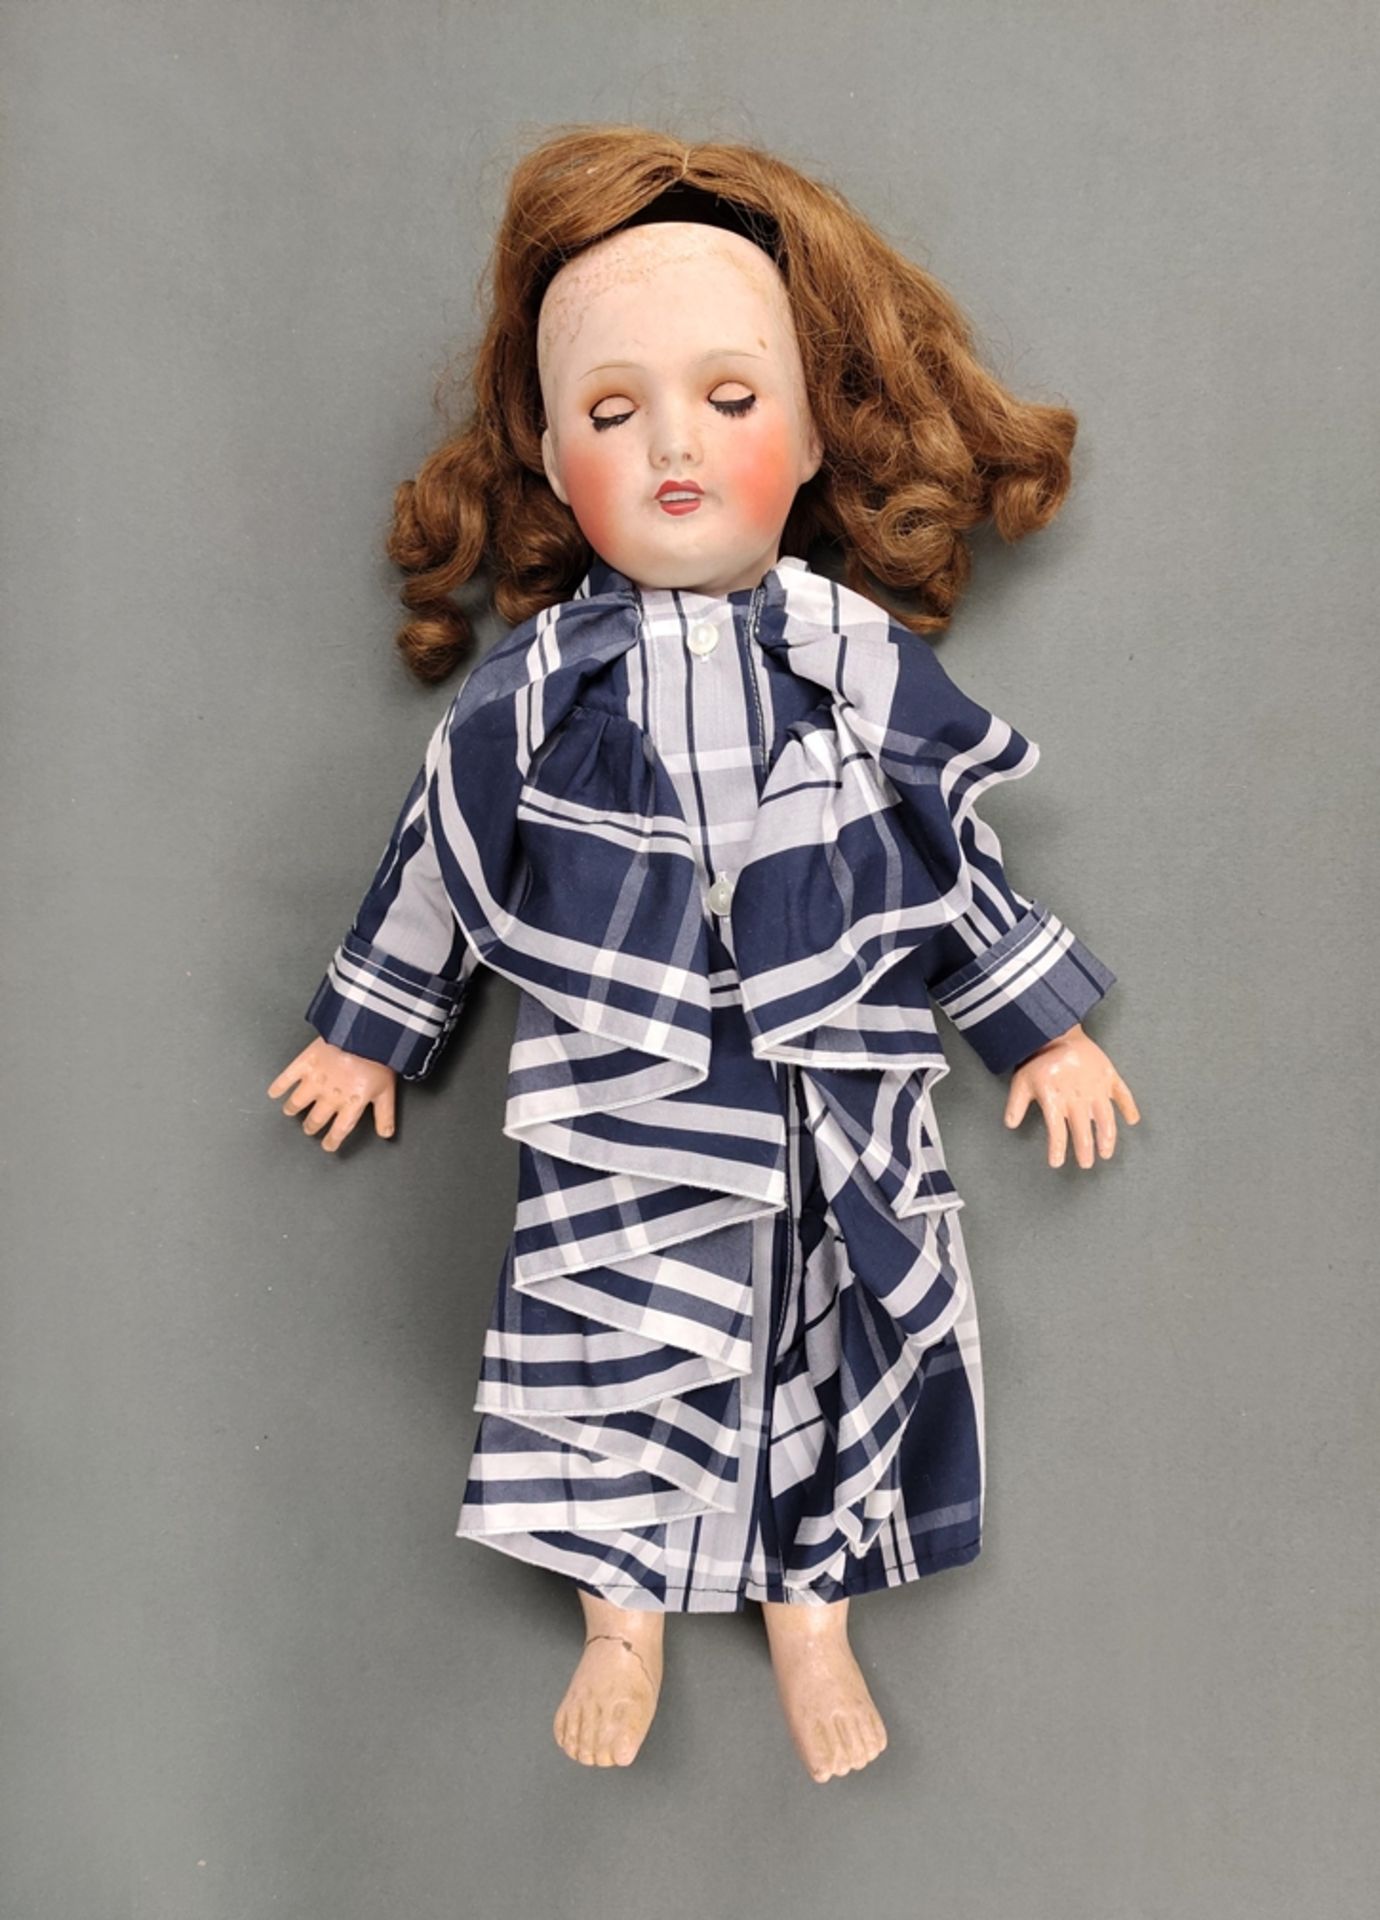 Doll girl, Unis France, porcelain crank head with sleeping eyes, brown human hair wig, length 47cm - Image 2 of 5